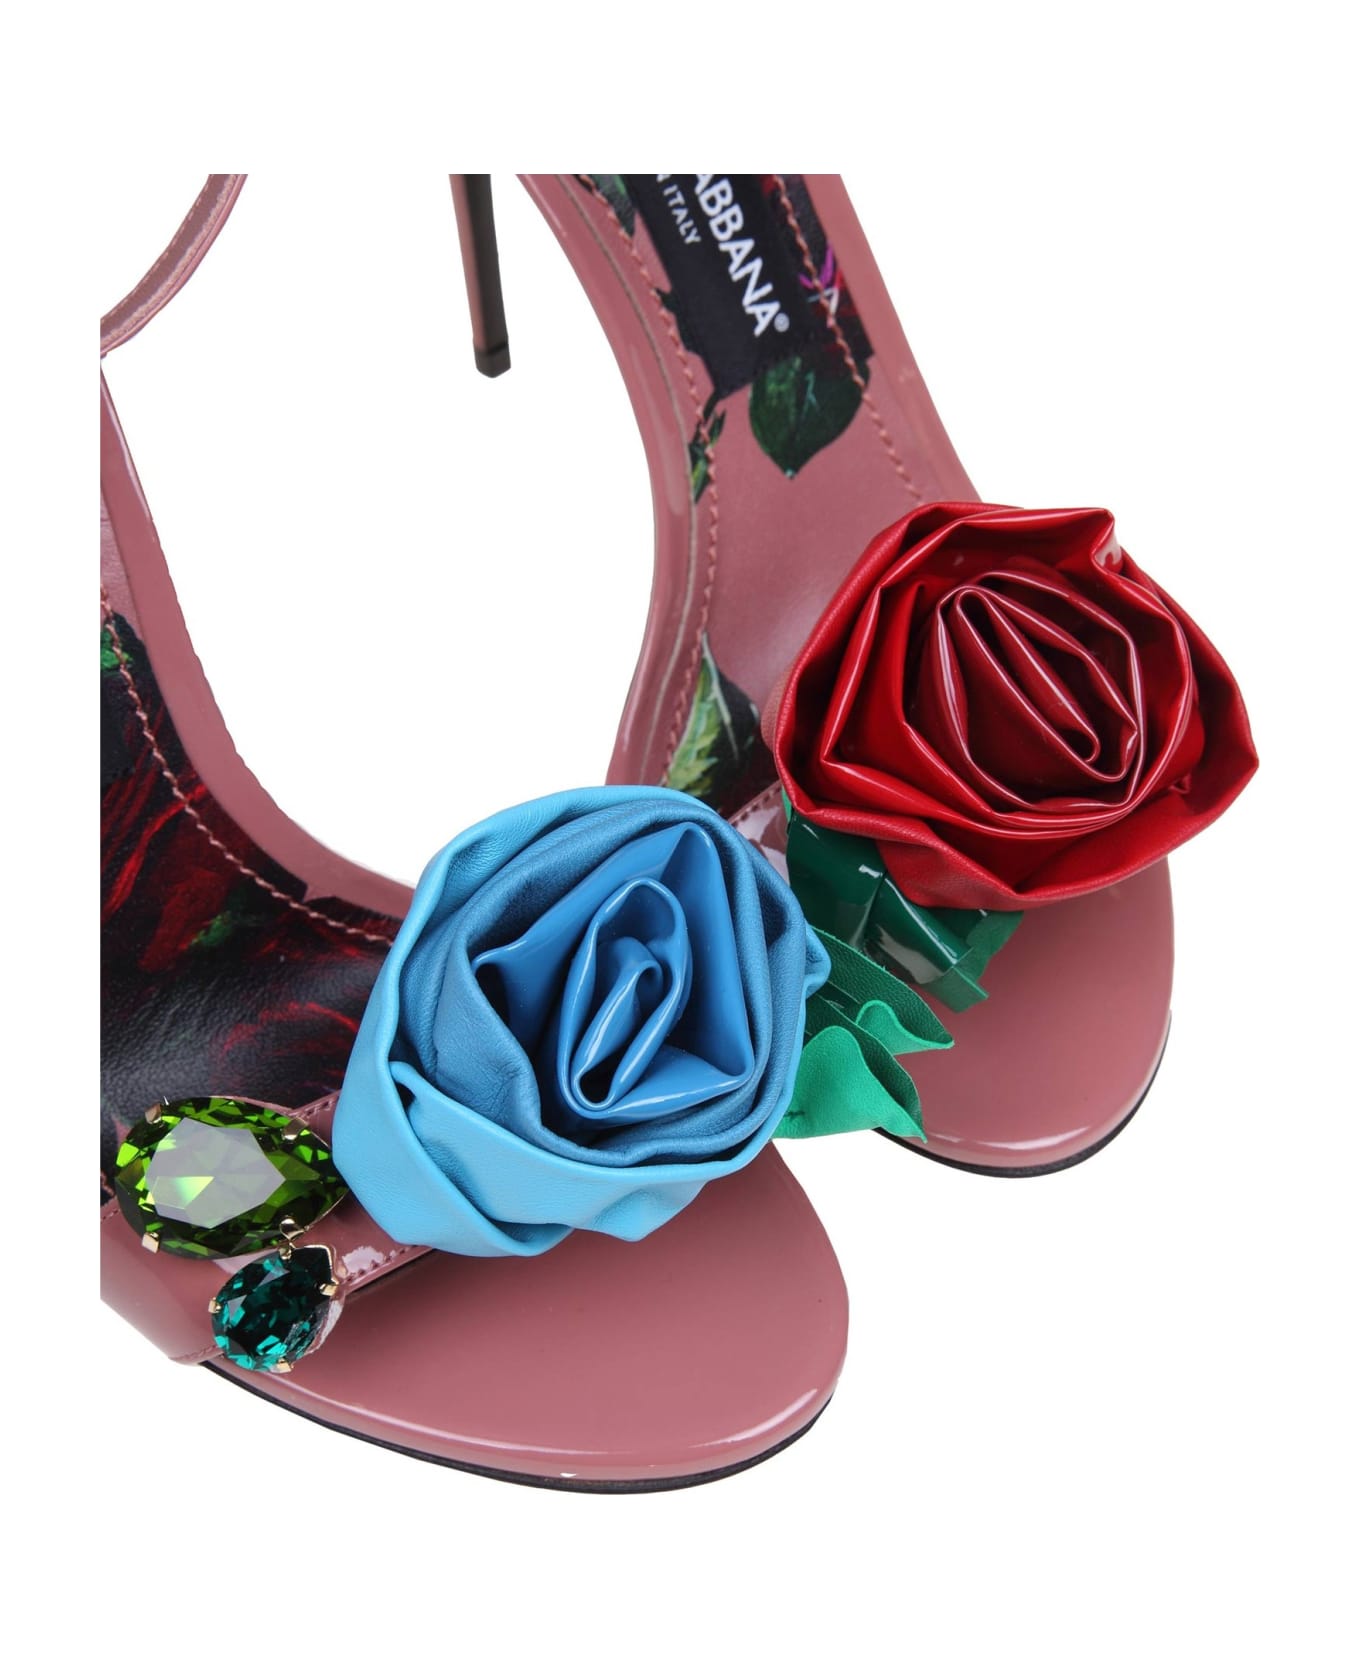 Dolce & Gabbana Kiera Patent Sandal - PINK